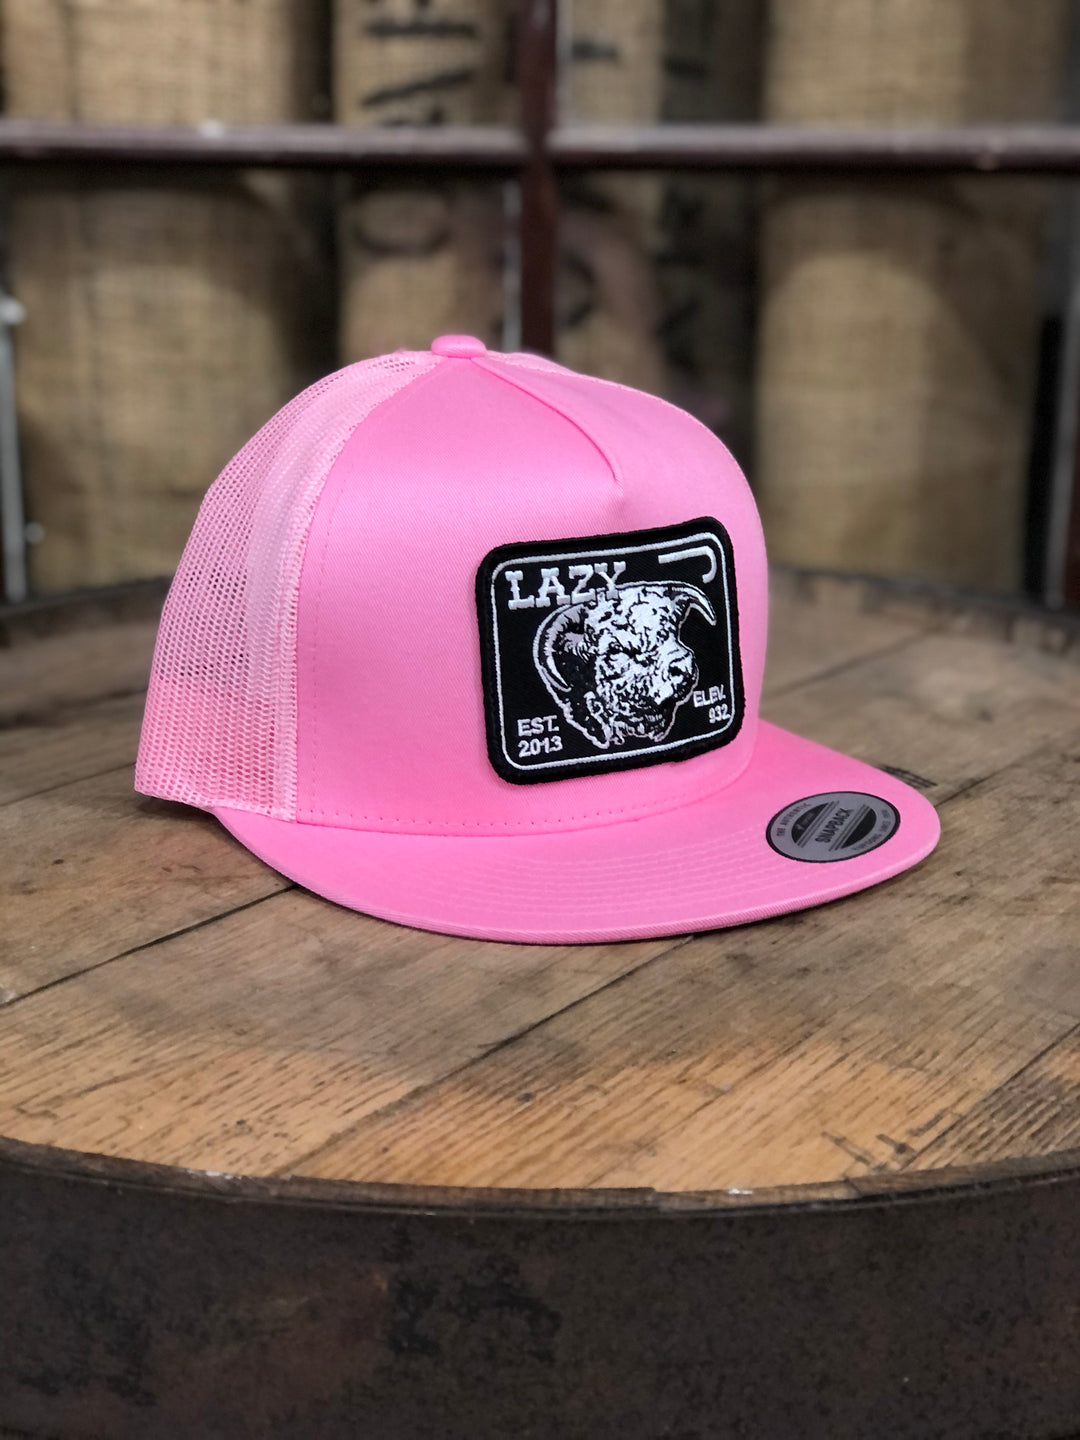 Lazy J Ranch Wear Pink & Pink 4" Elevation Cap